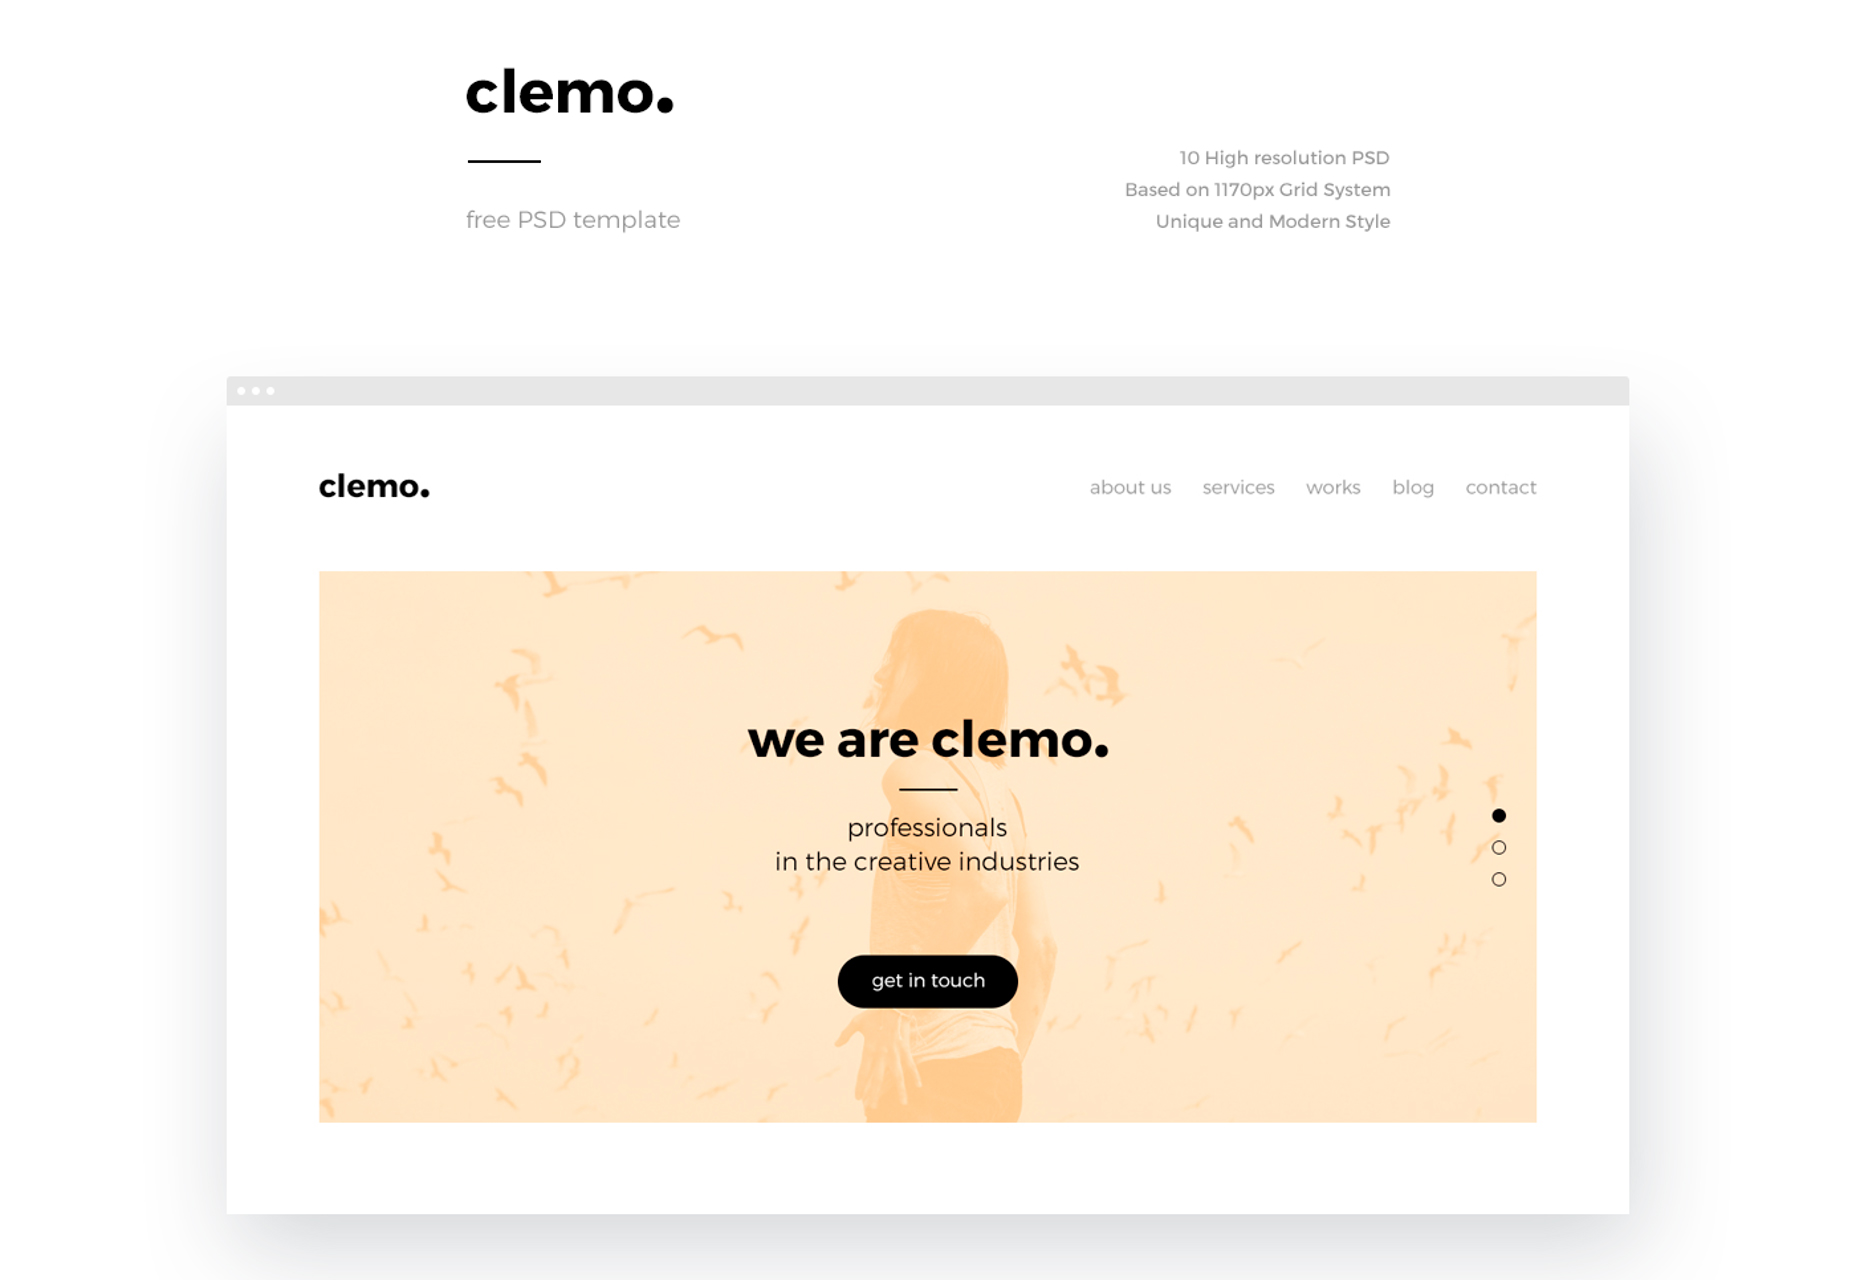 clemo-clean-modern-blogging-psd-template